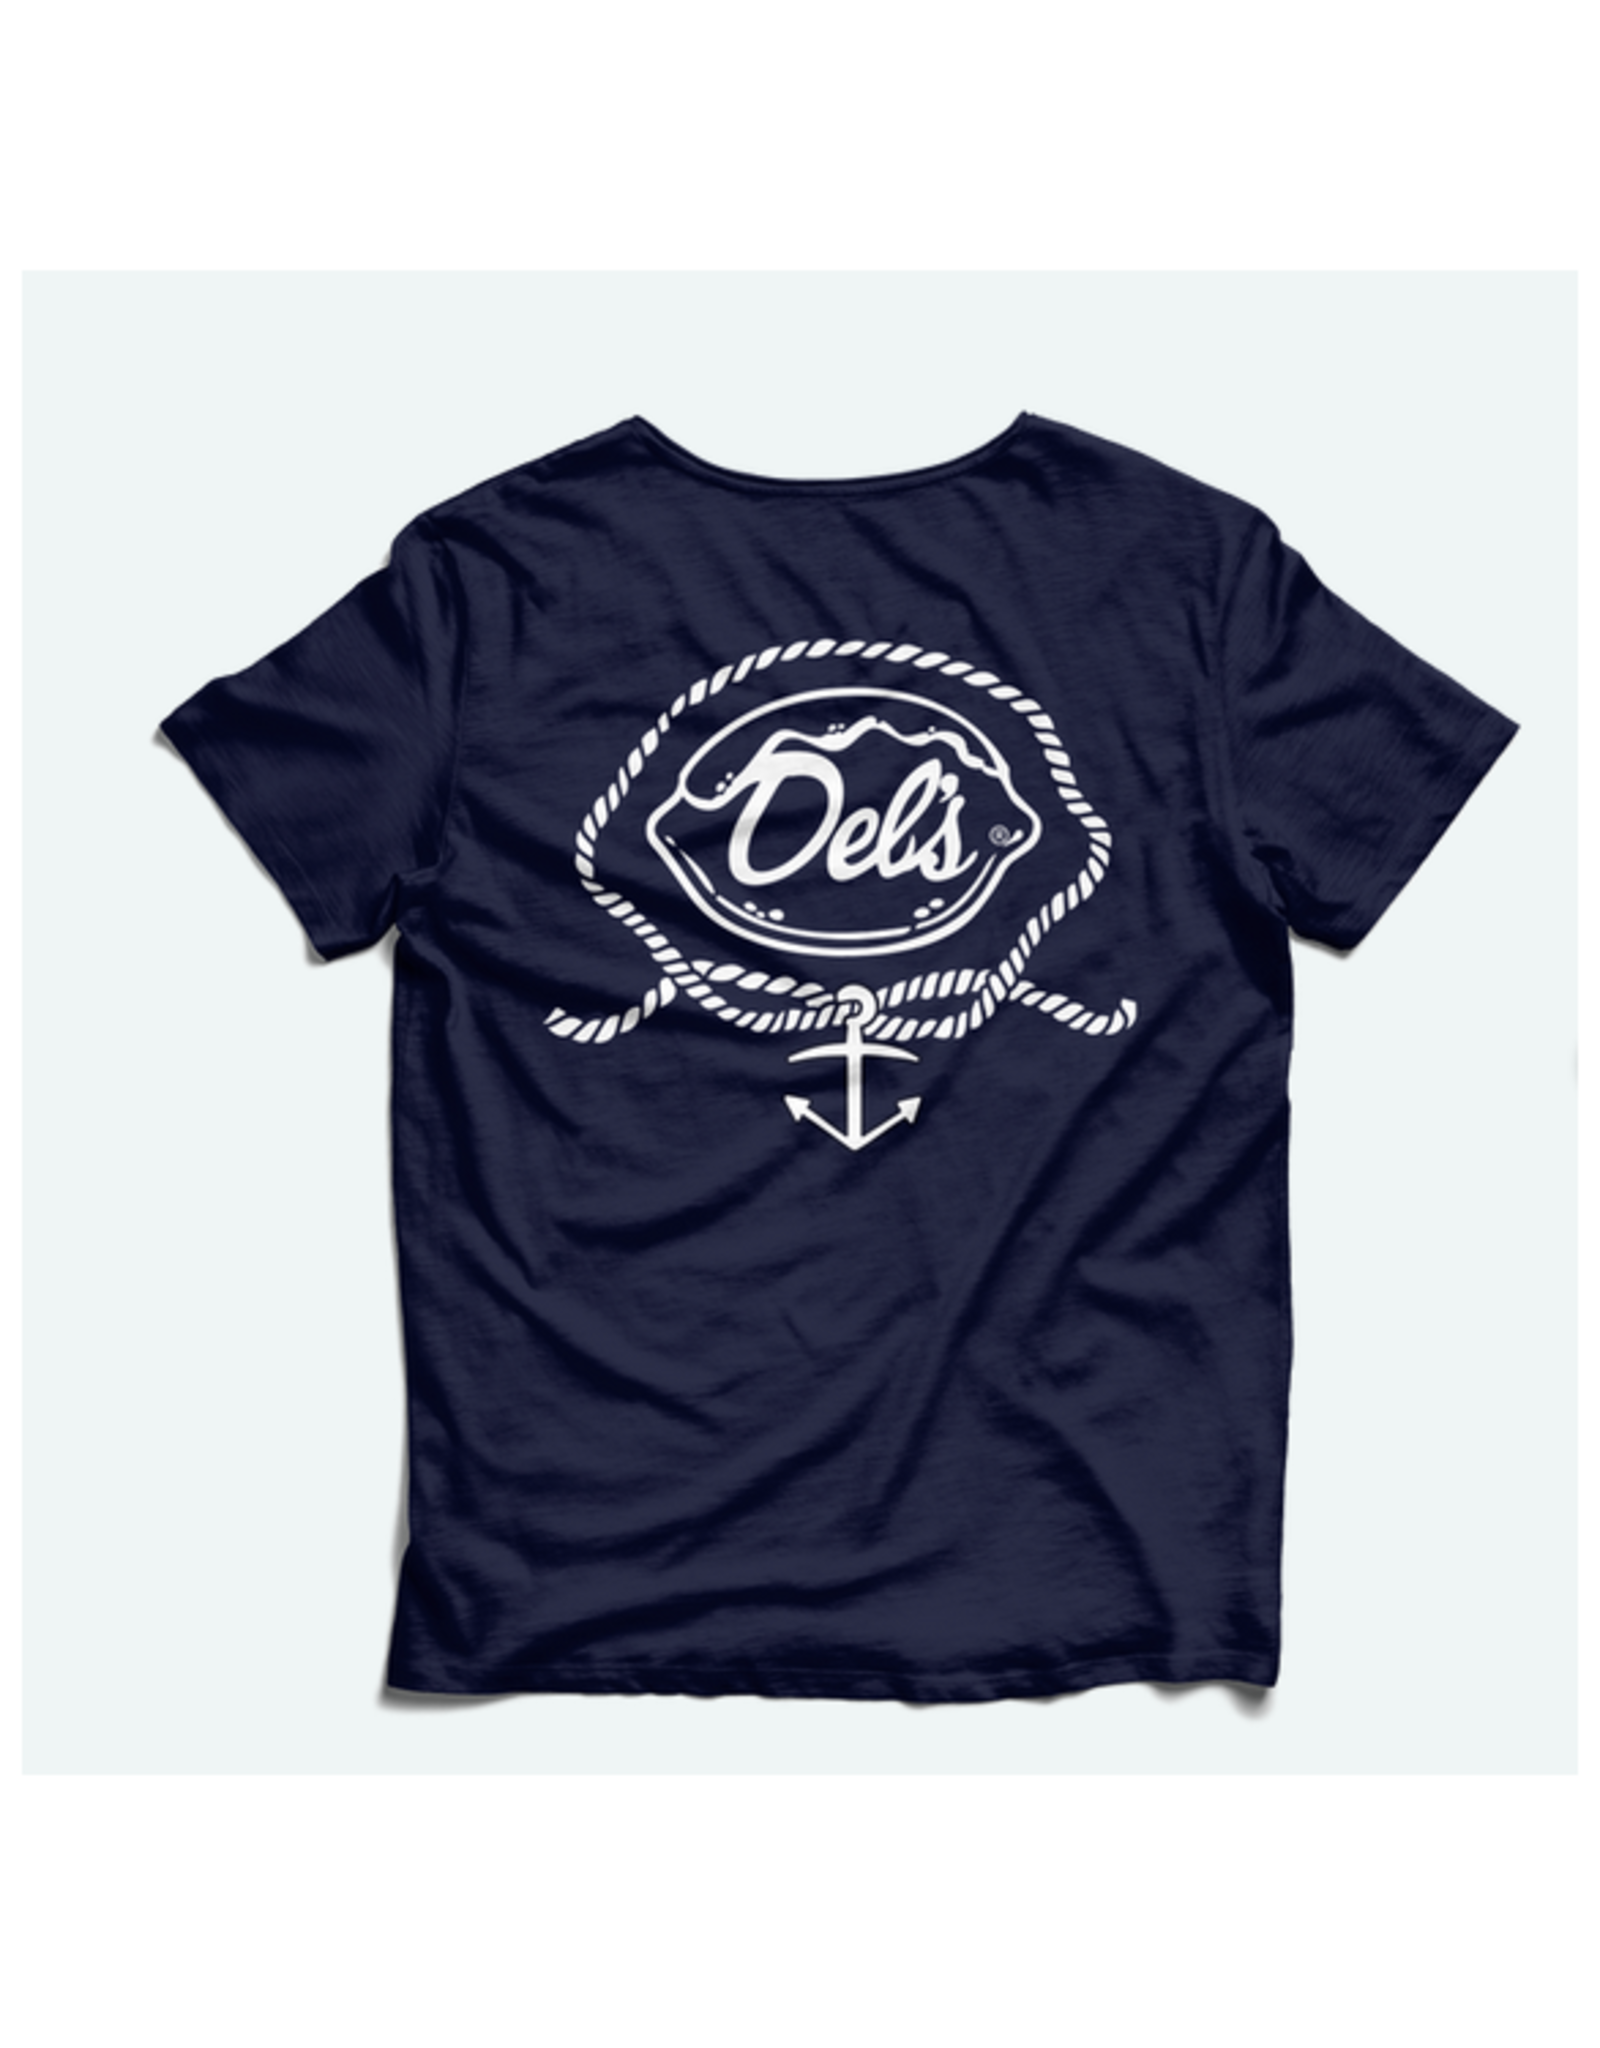 Del's Rope Logo Shirt